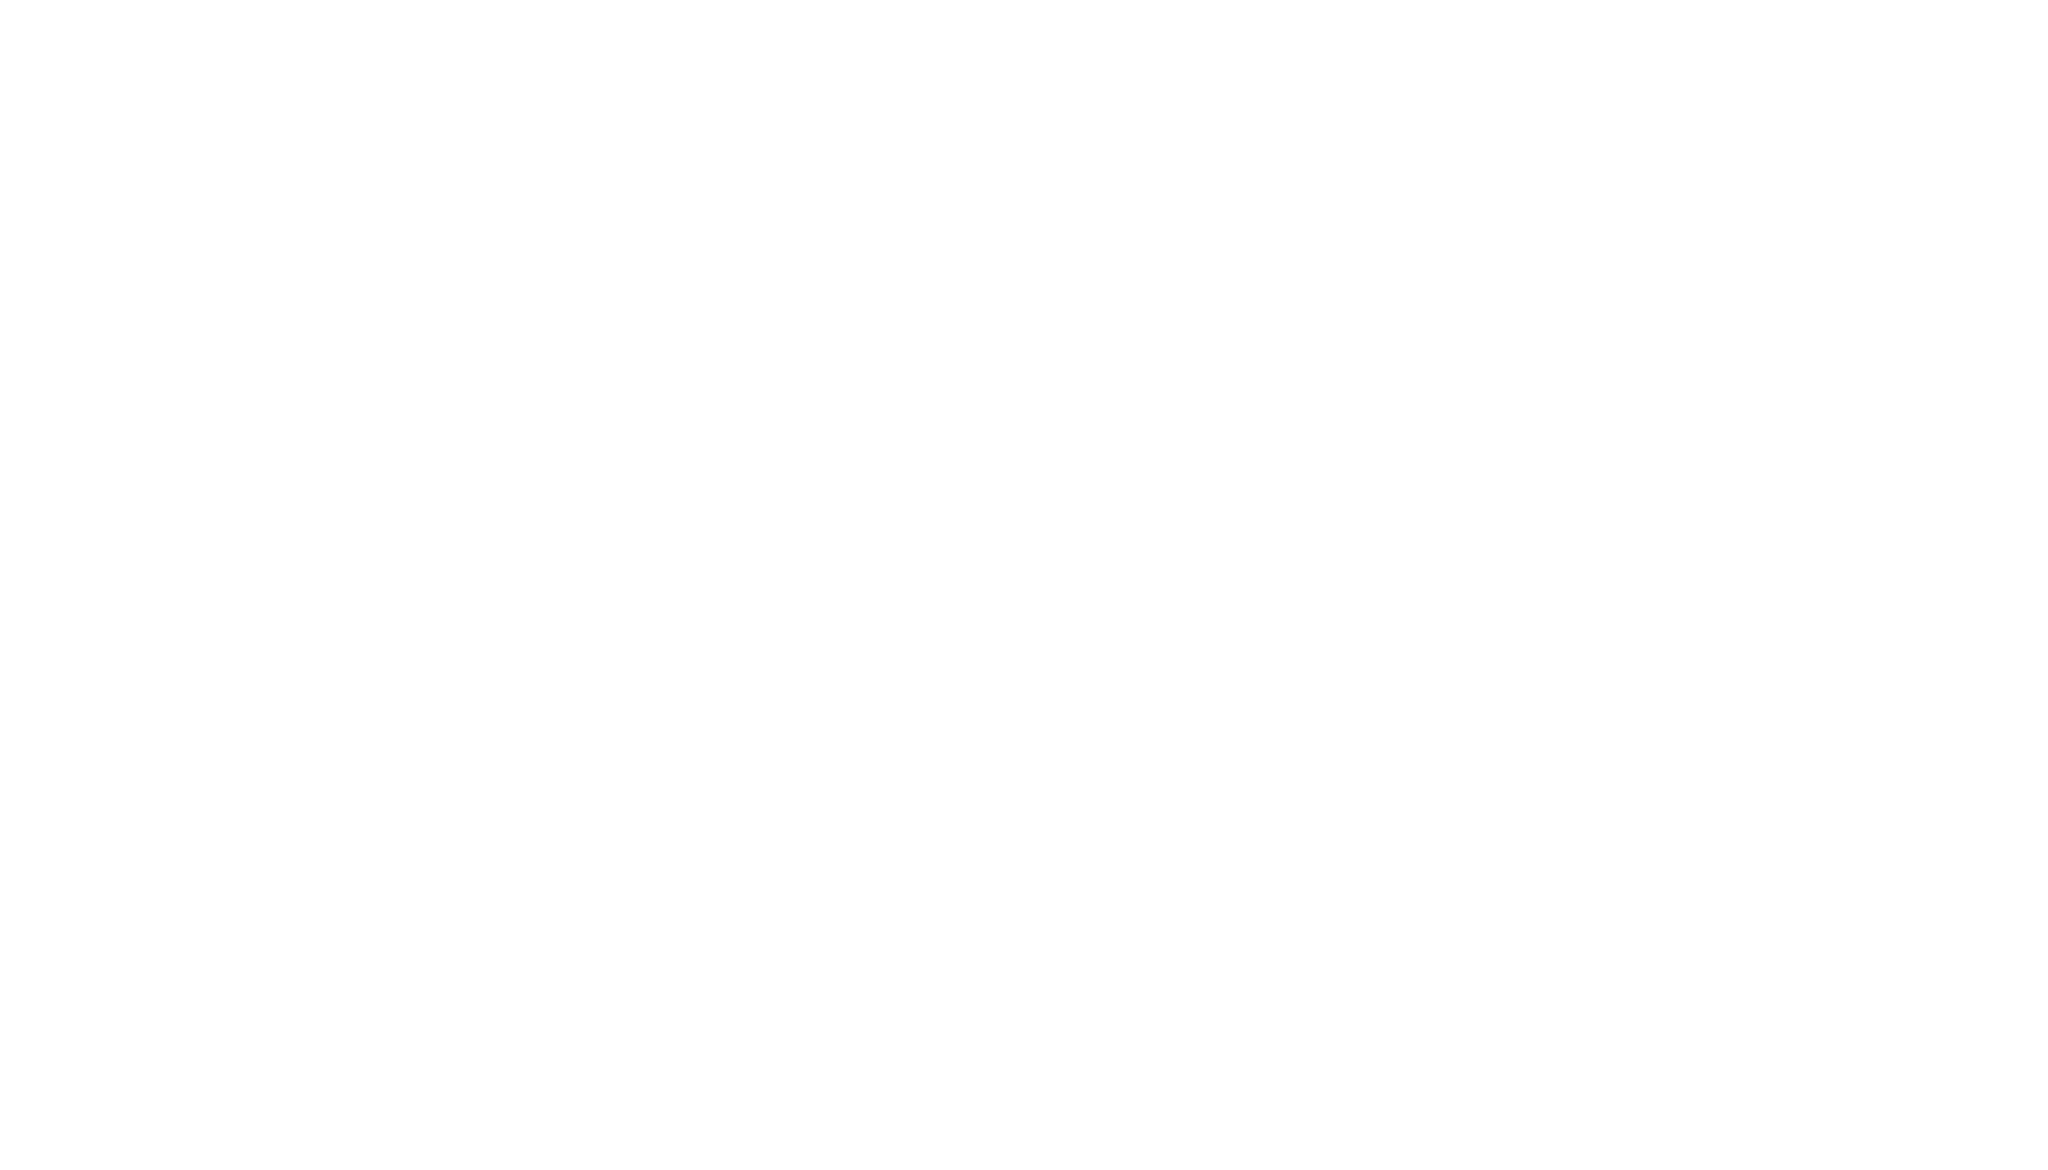 ABC Adult School